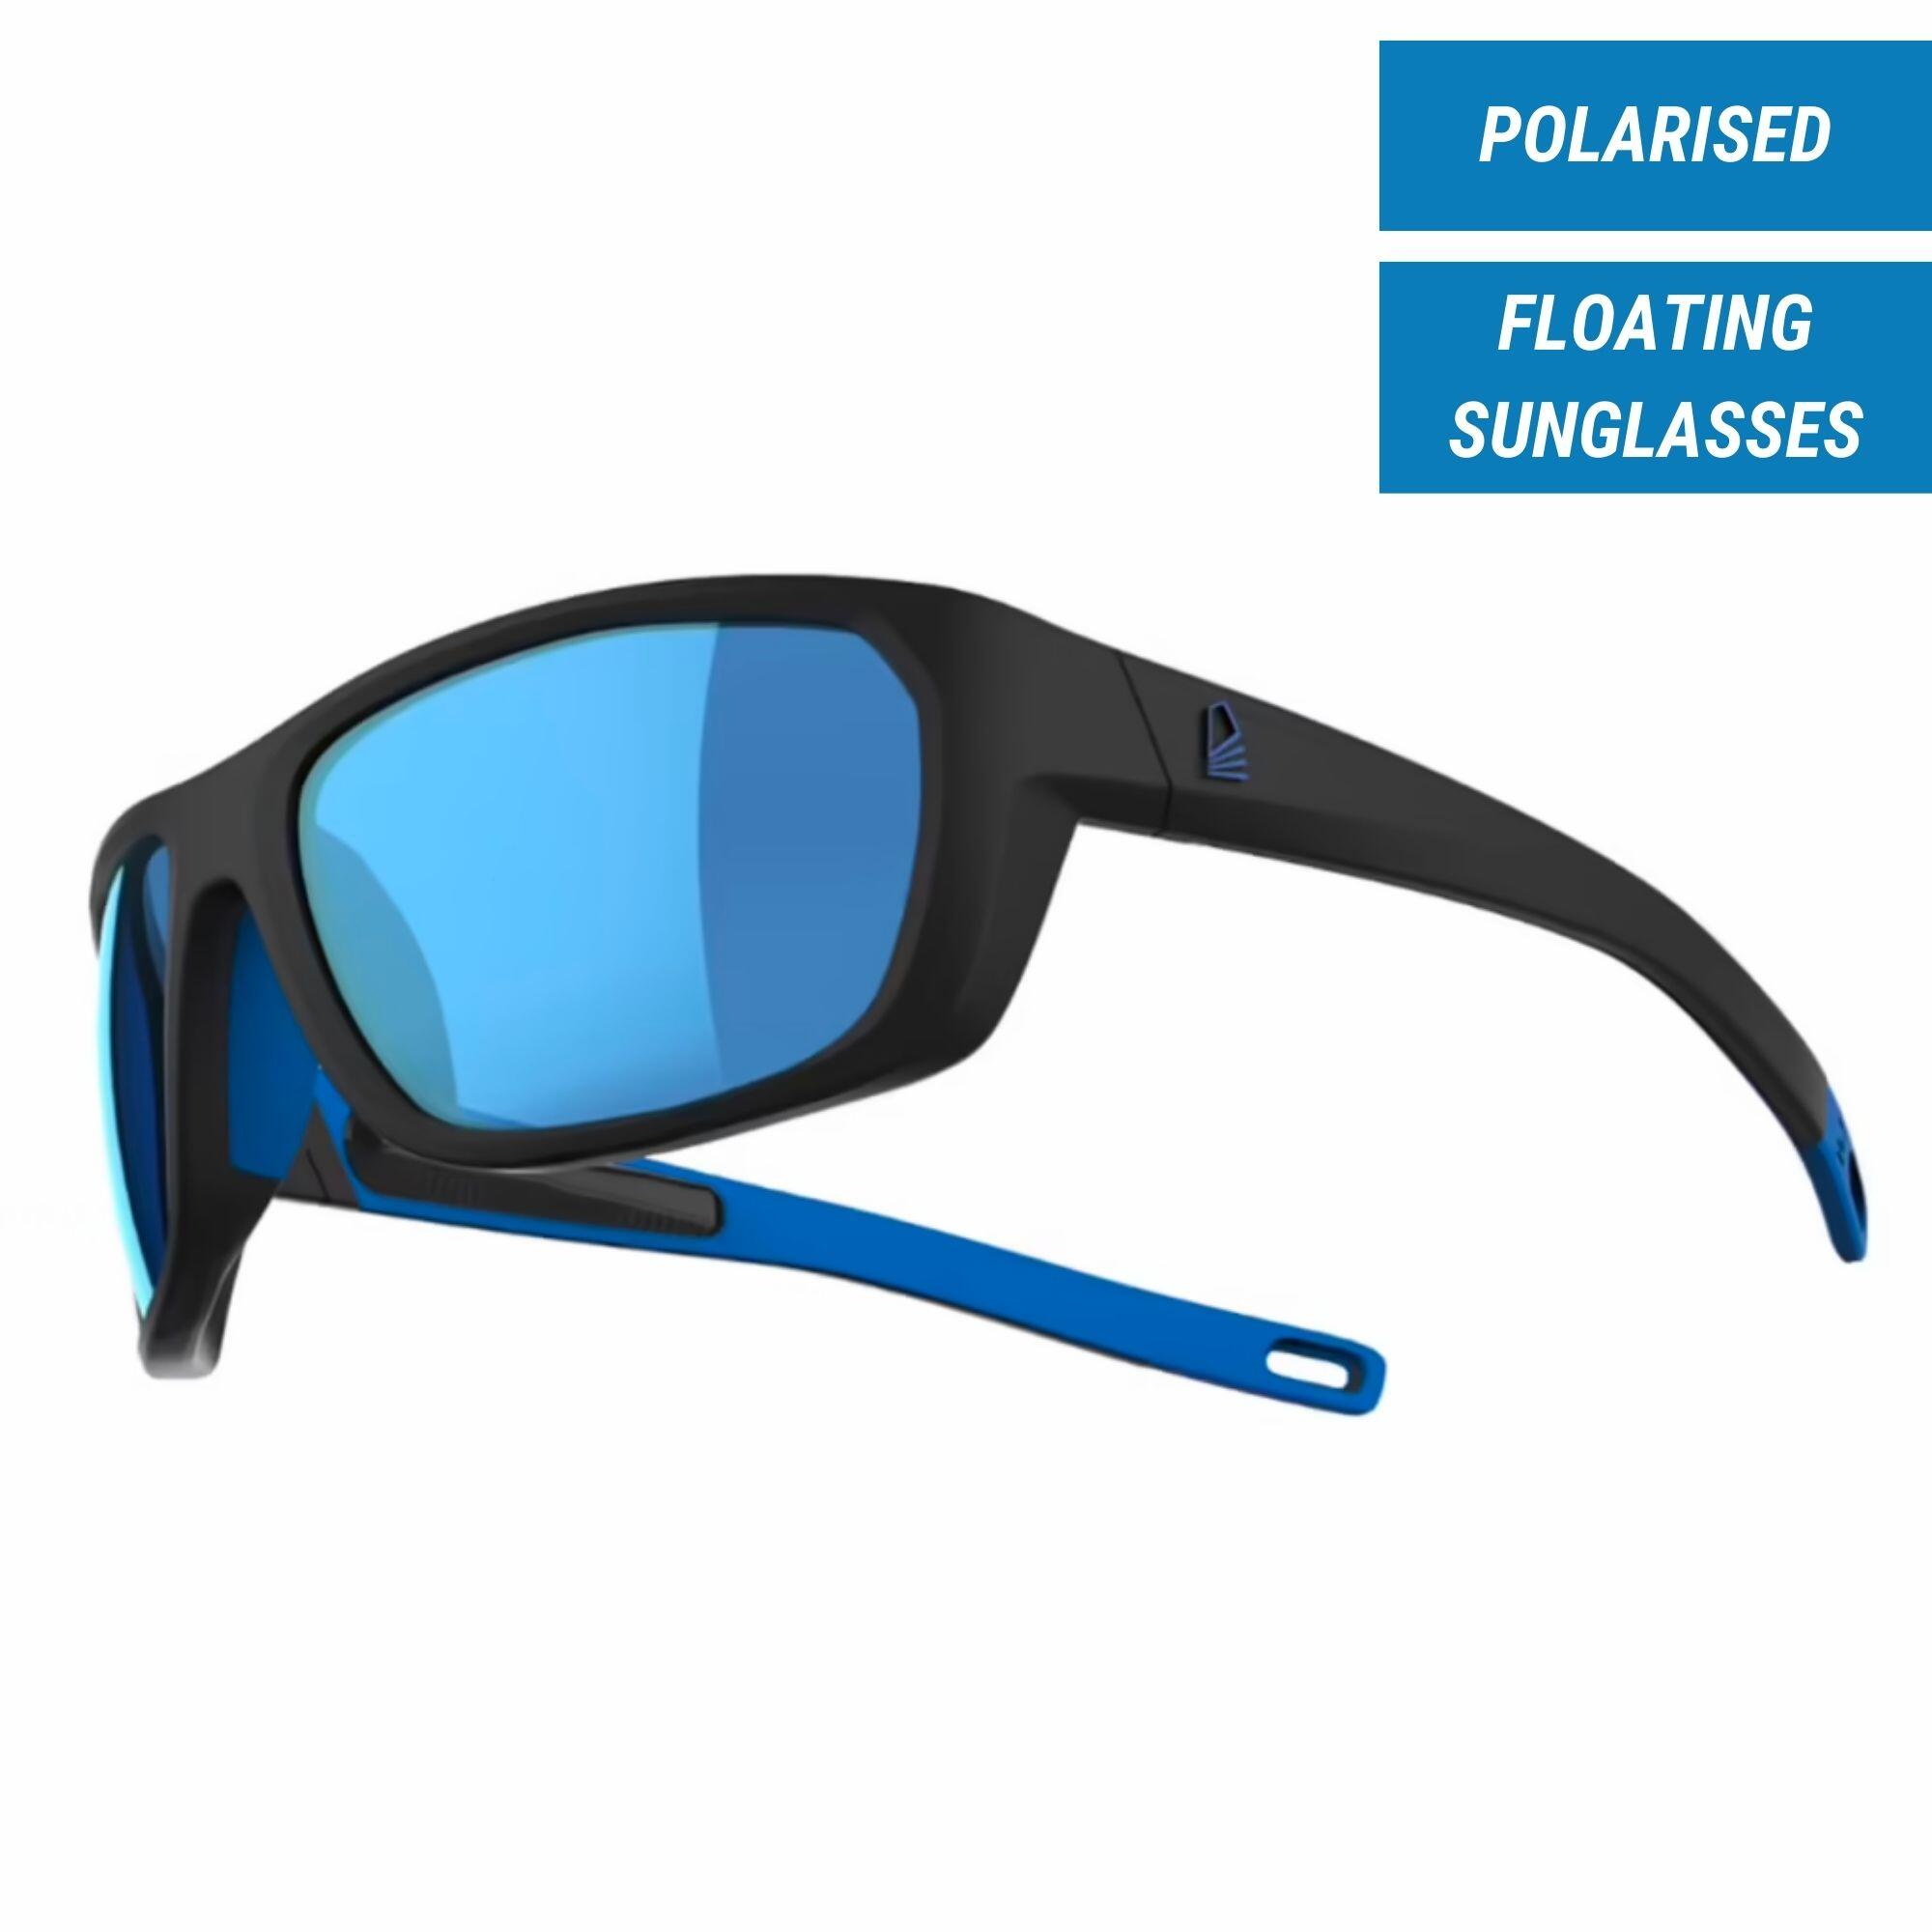 Adult Sailing Floating Polarised Sunglasses 500 - Size M Black 1/13